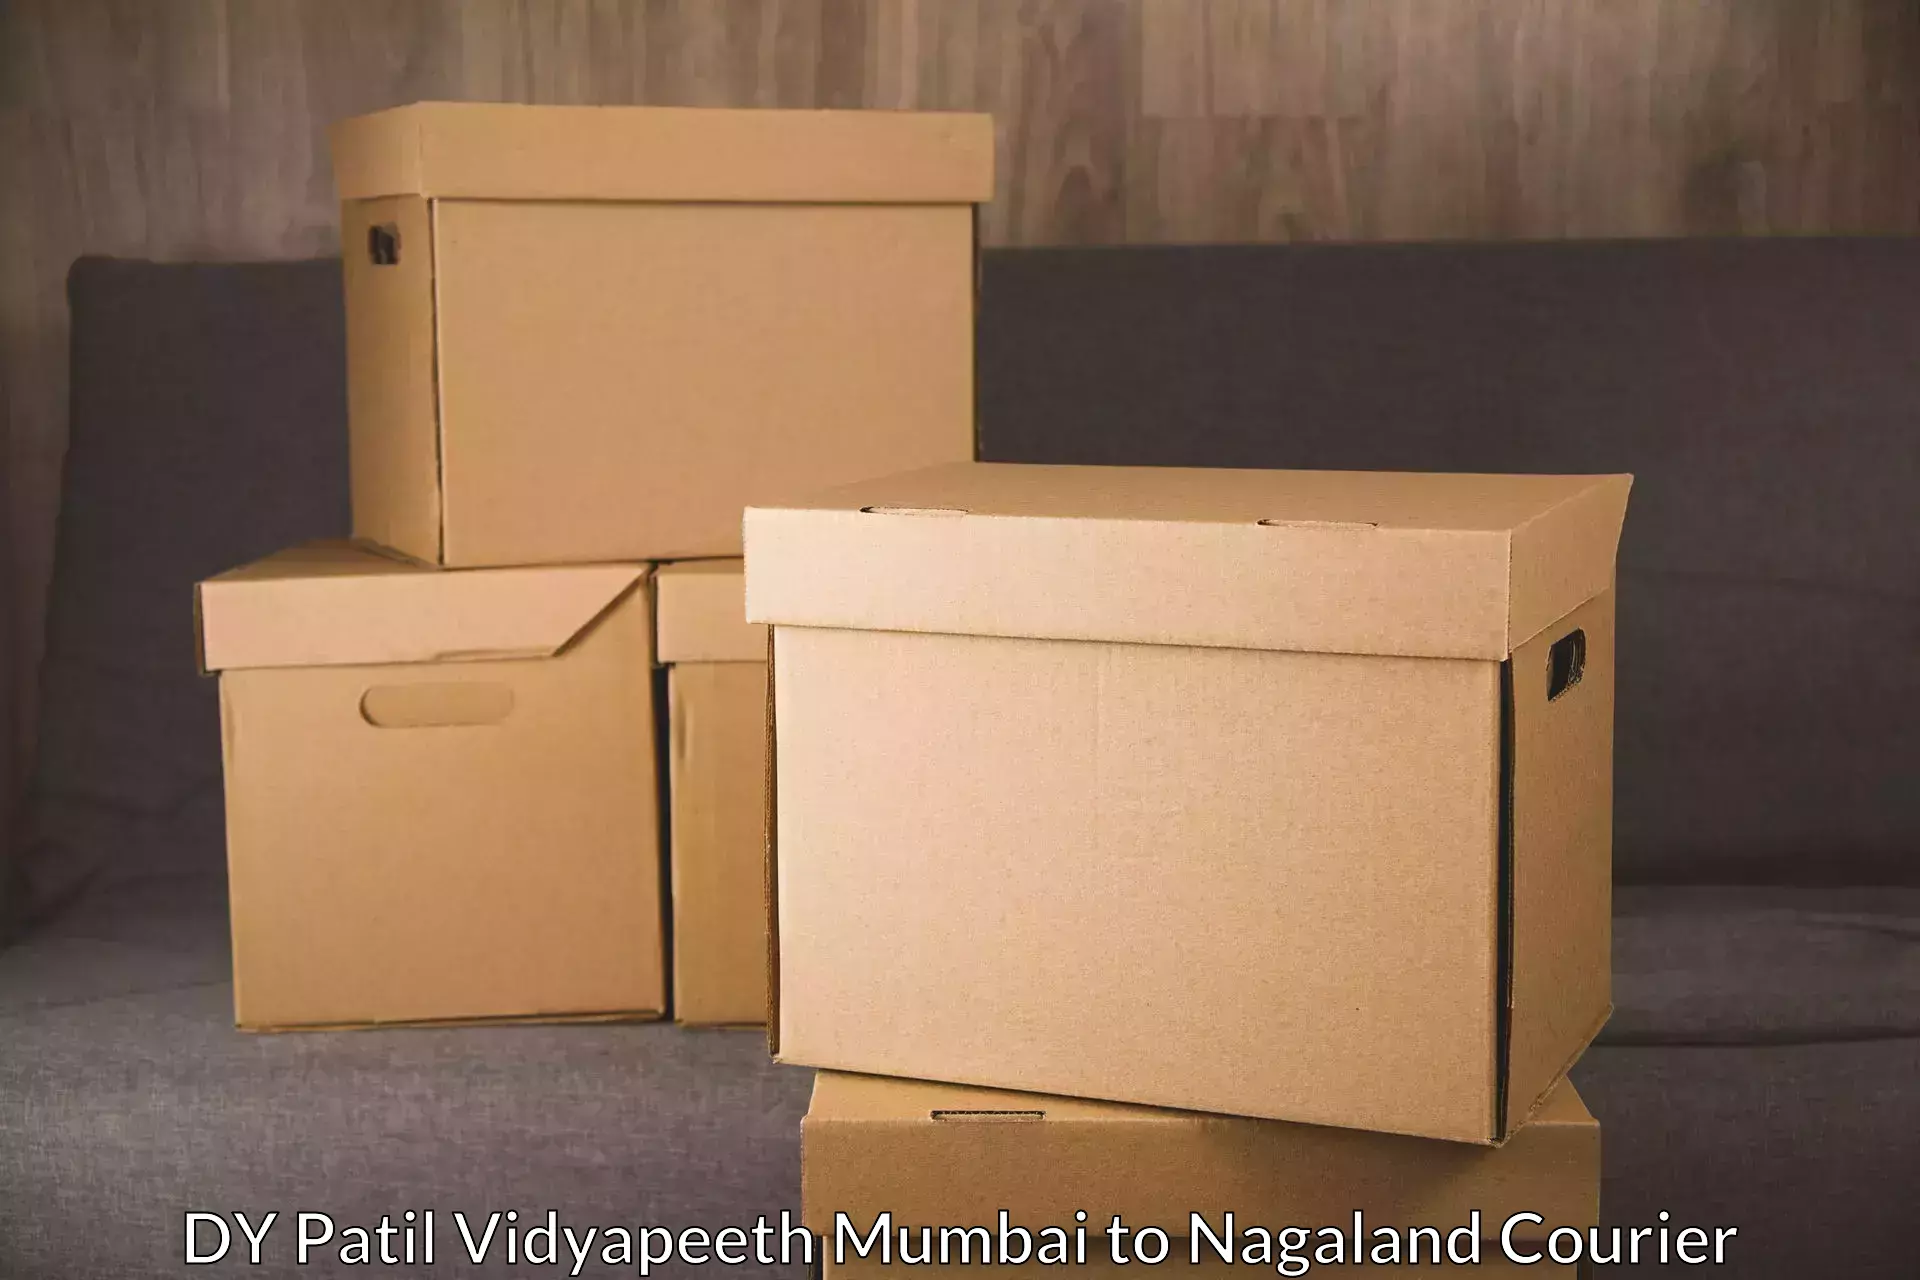 Speedy delivery service DY Patil Vidyapeeth Mumbai to Kohima